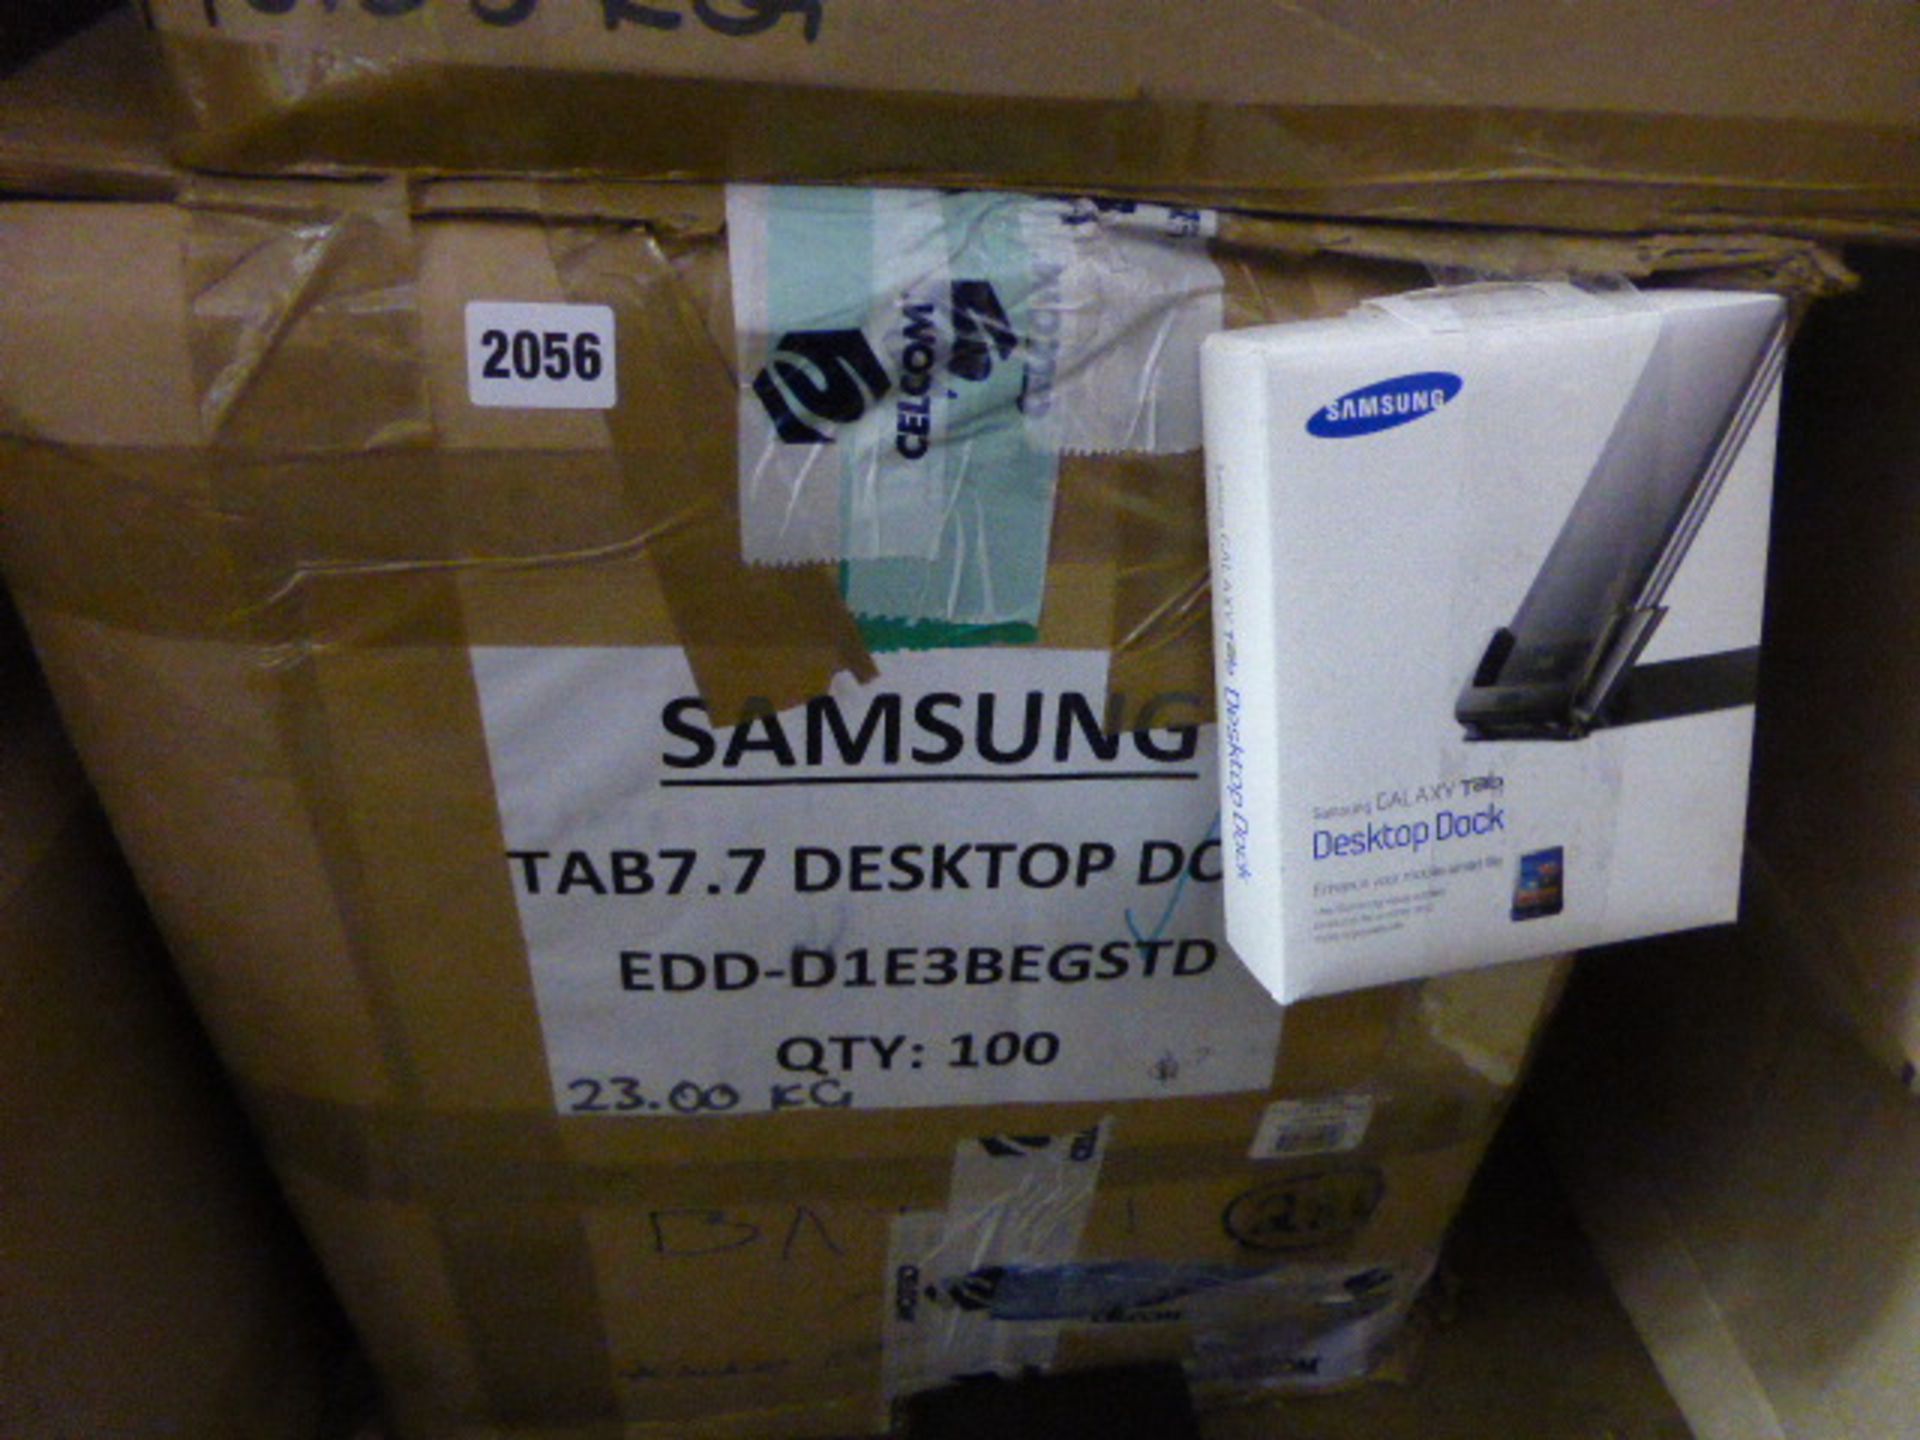 Approx. 100 desktop docs for Samsung Galaxy Tab7.0